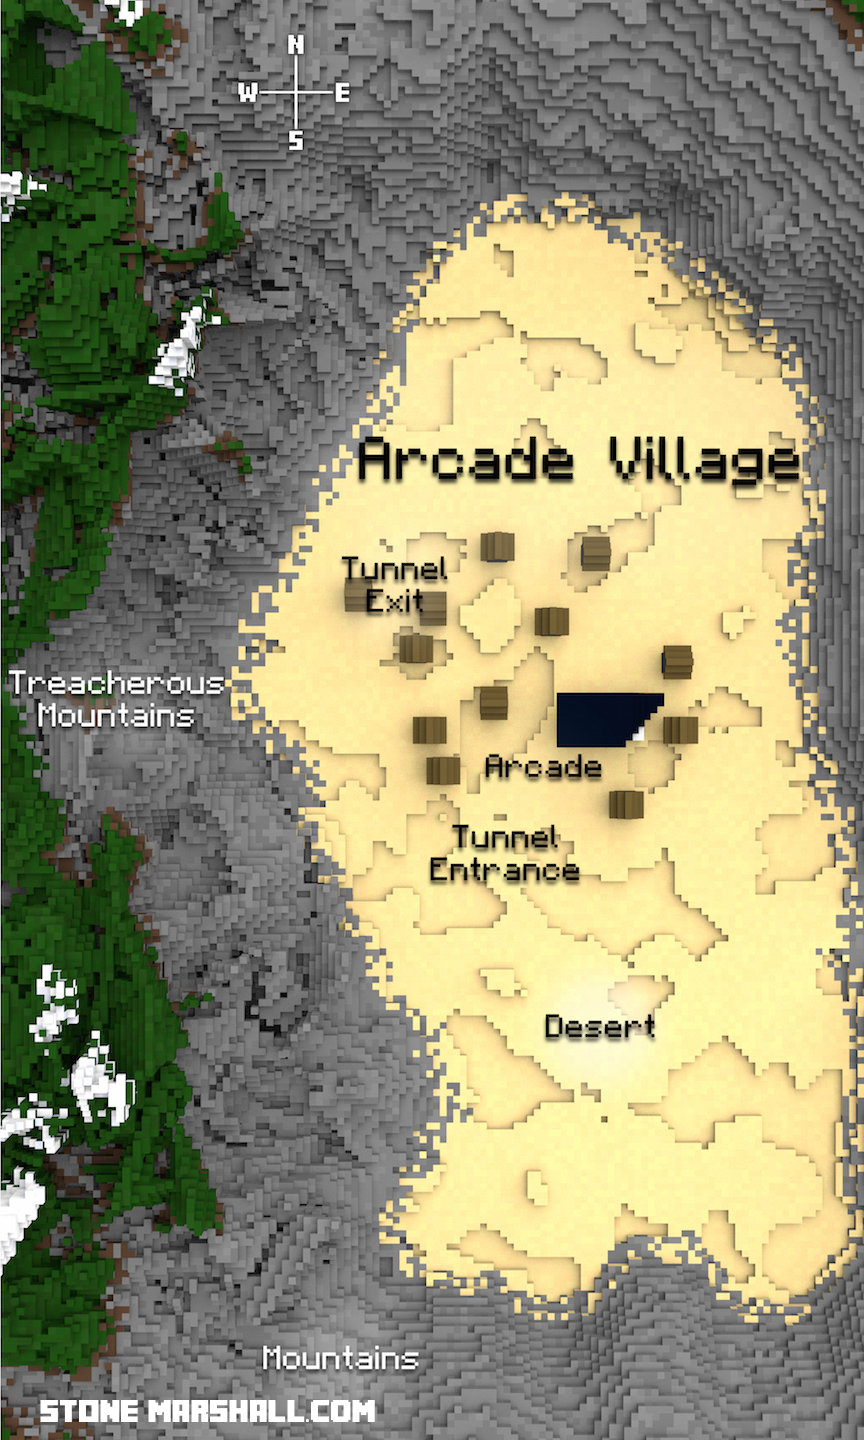 Arcade Village